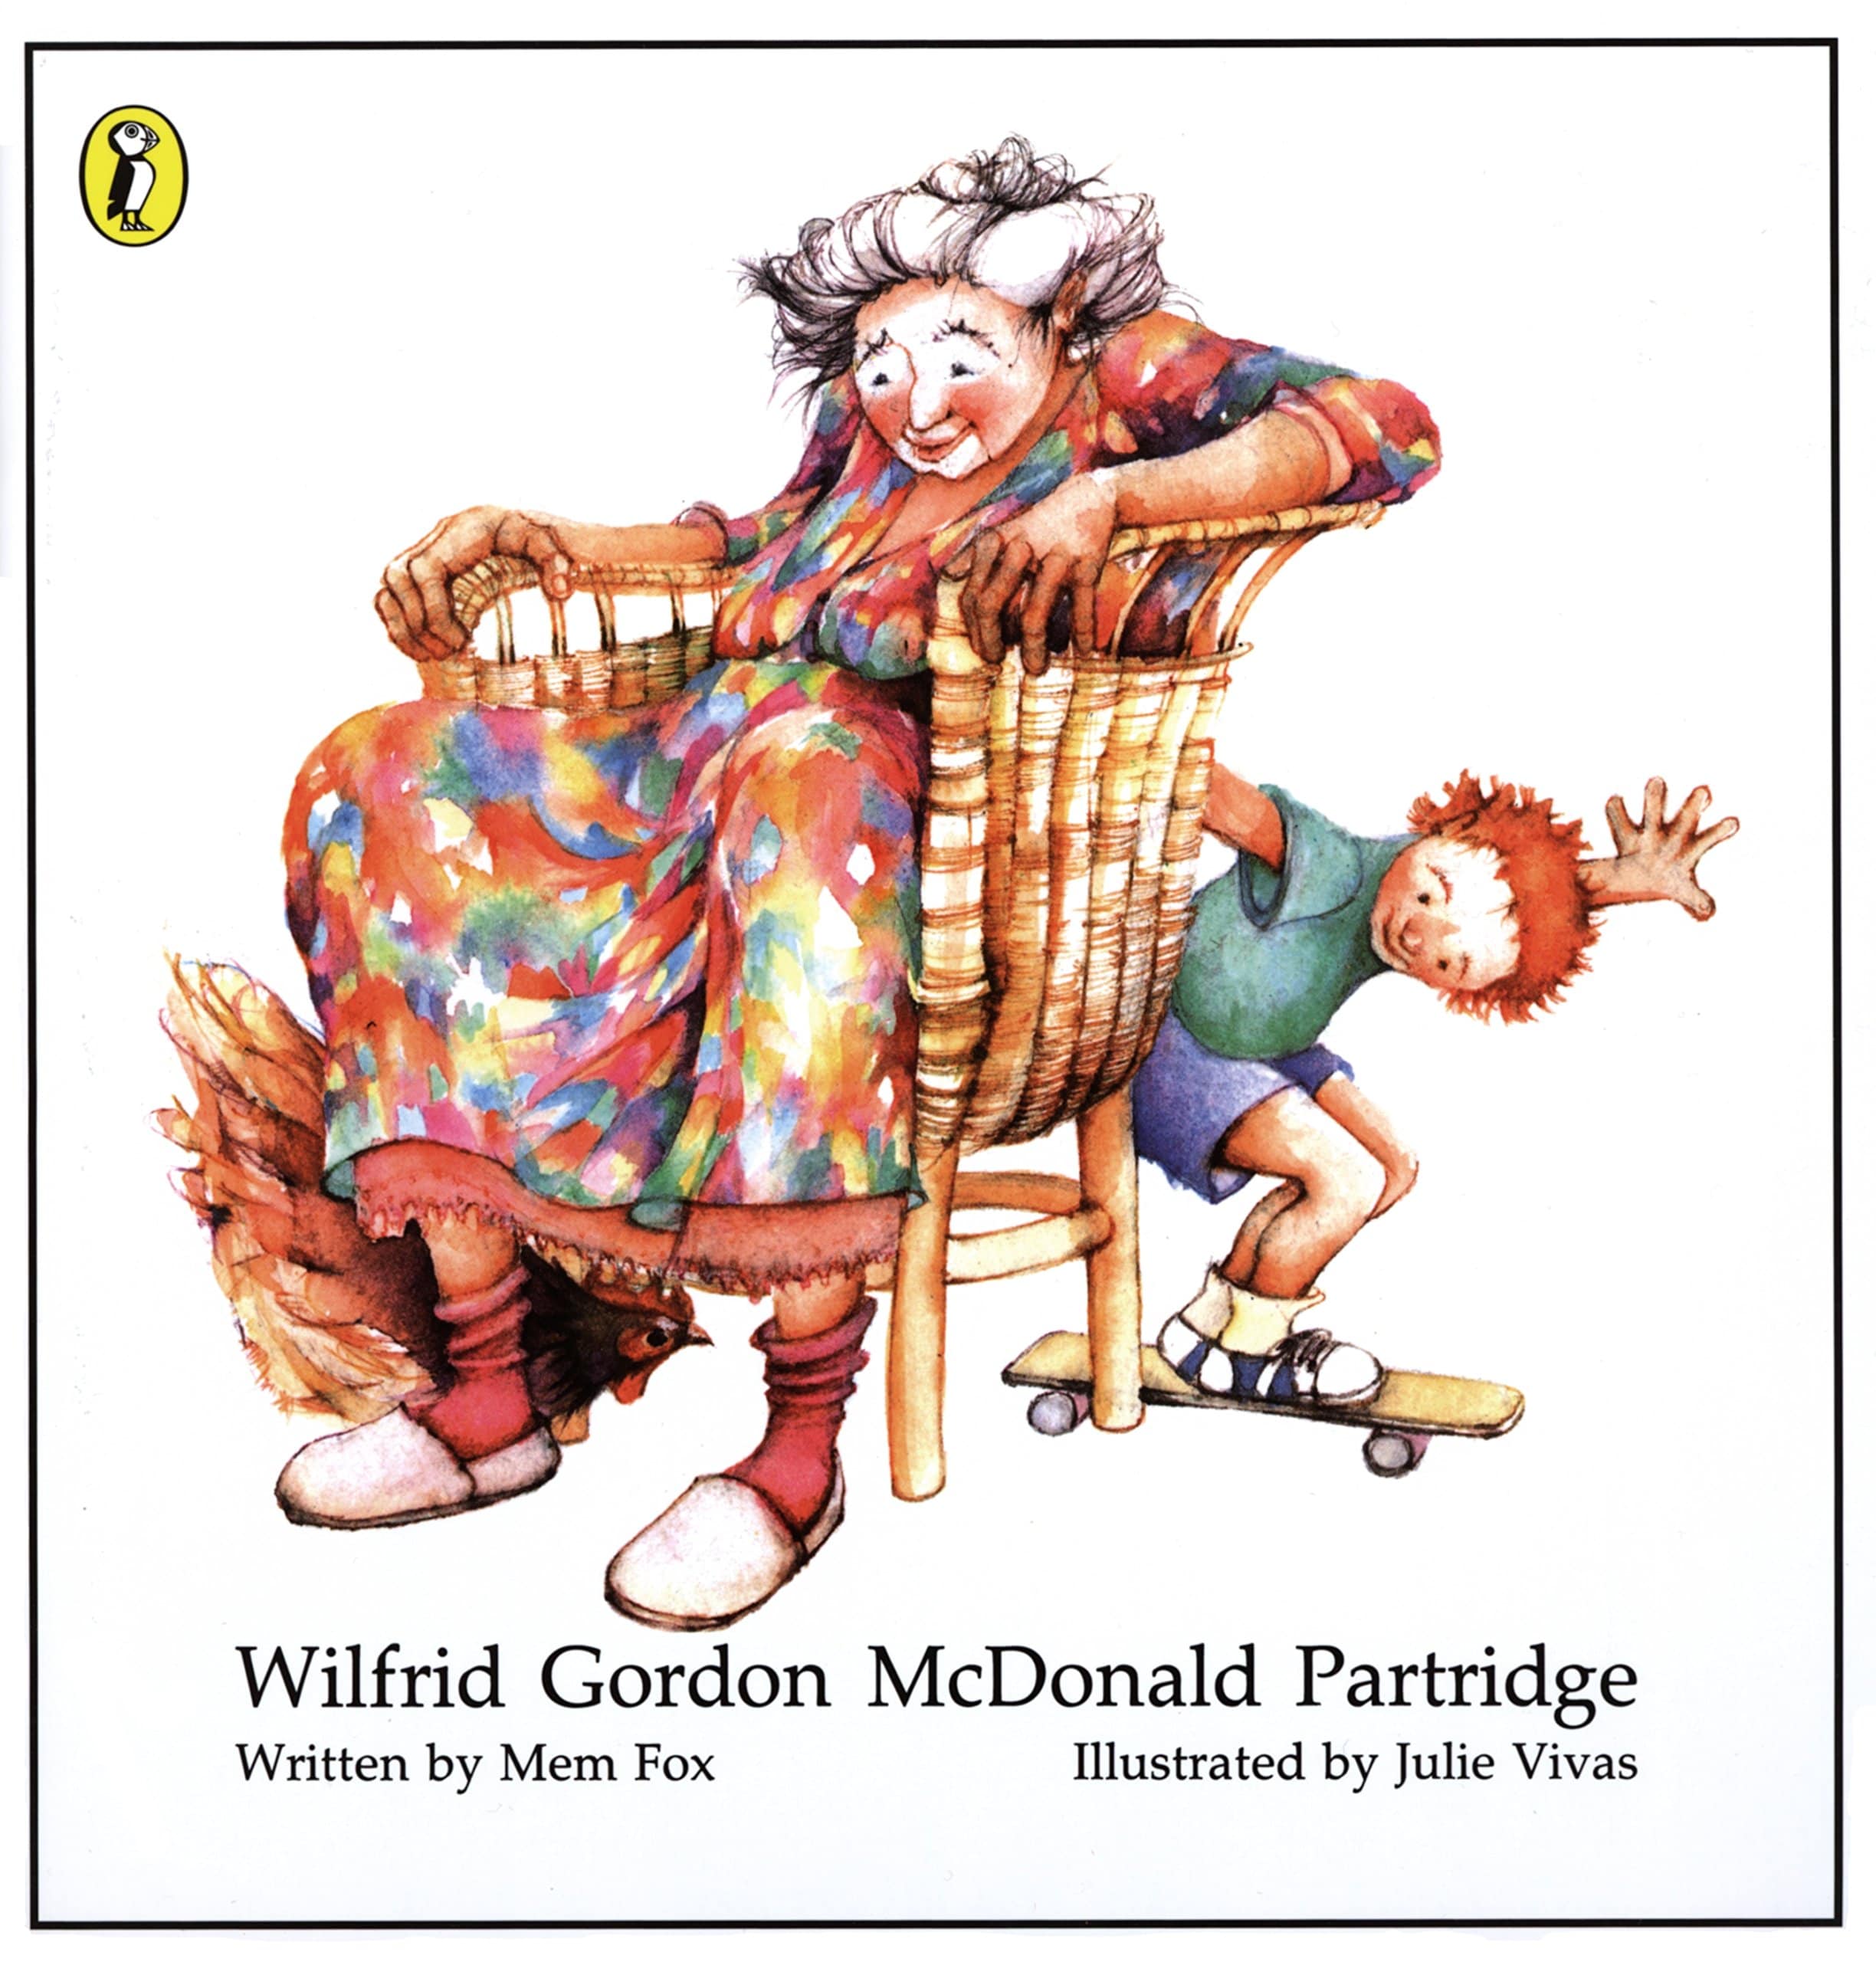 IMG : Wilfred Gordon McDonald Partridge